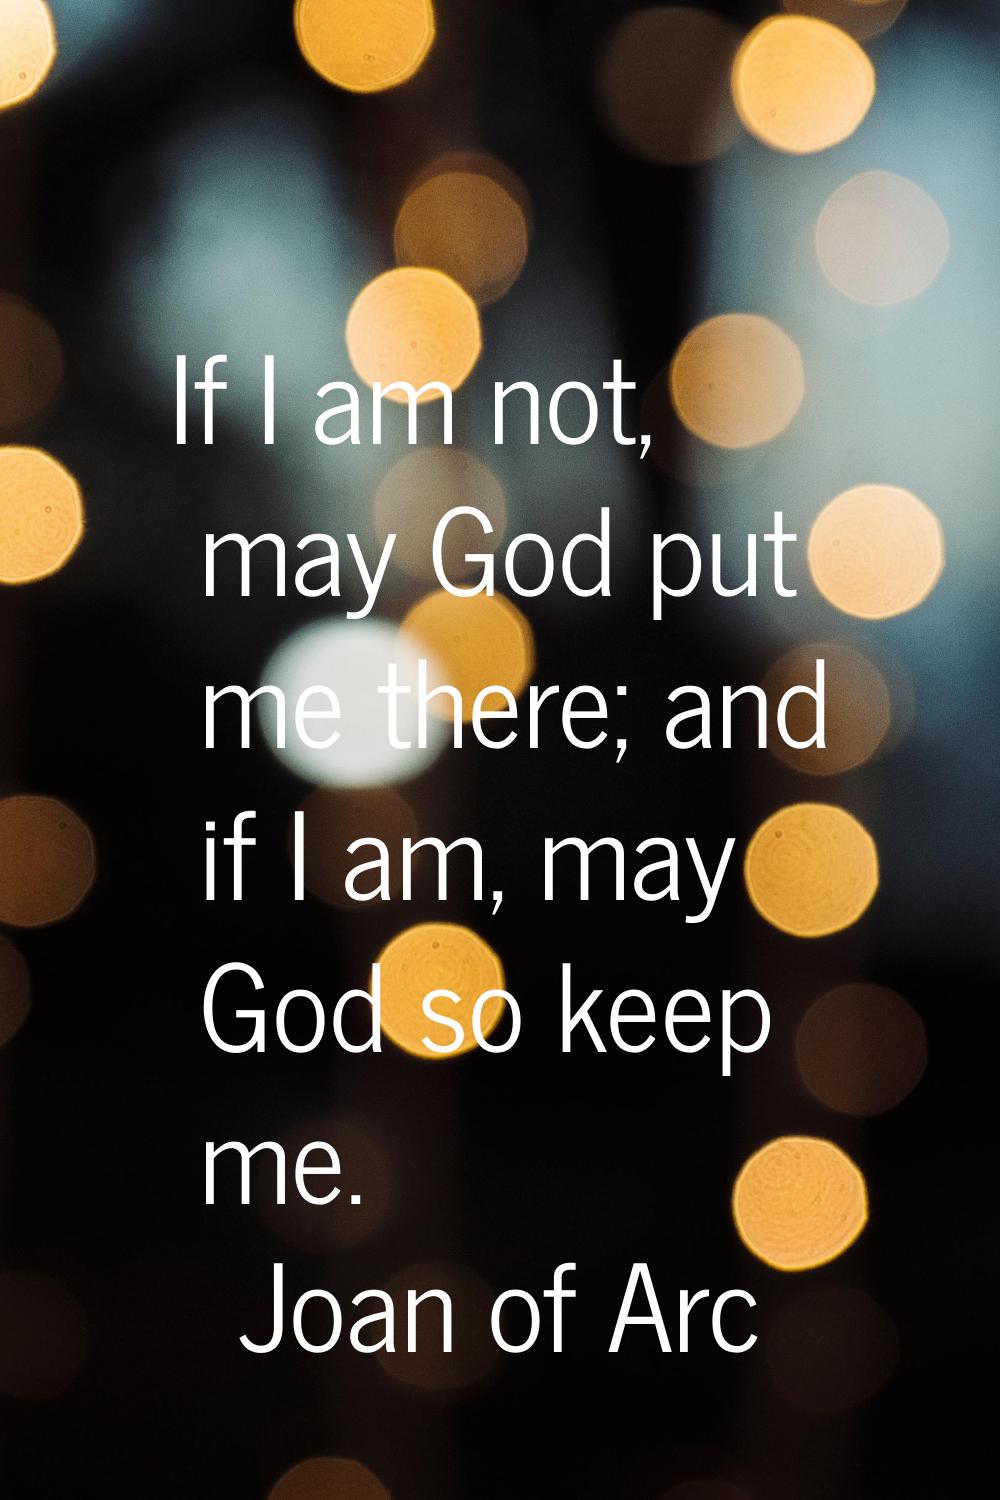 If I am not, may God put me there; and if I am, may God so keep me.